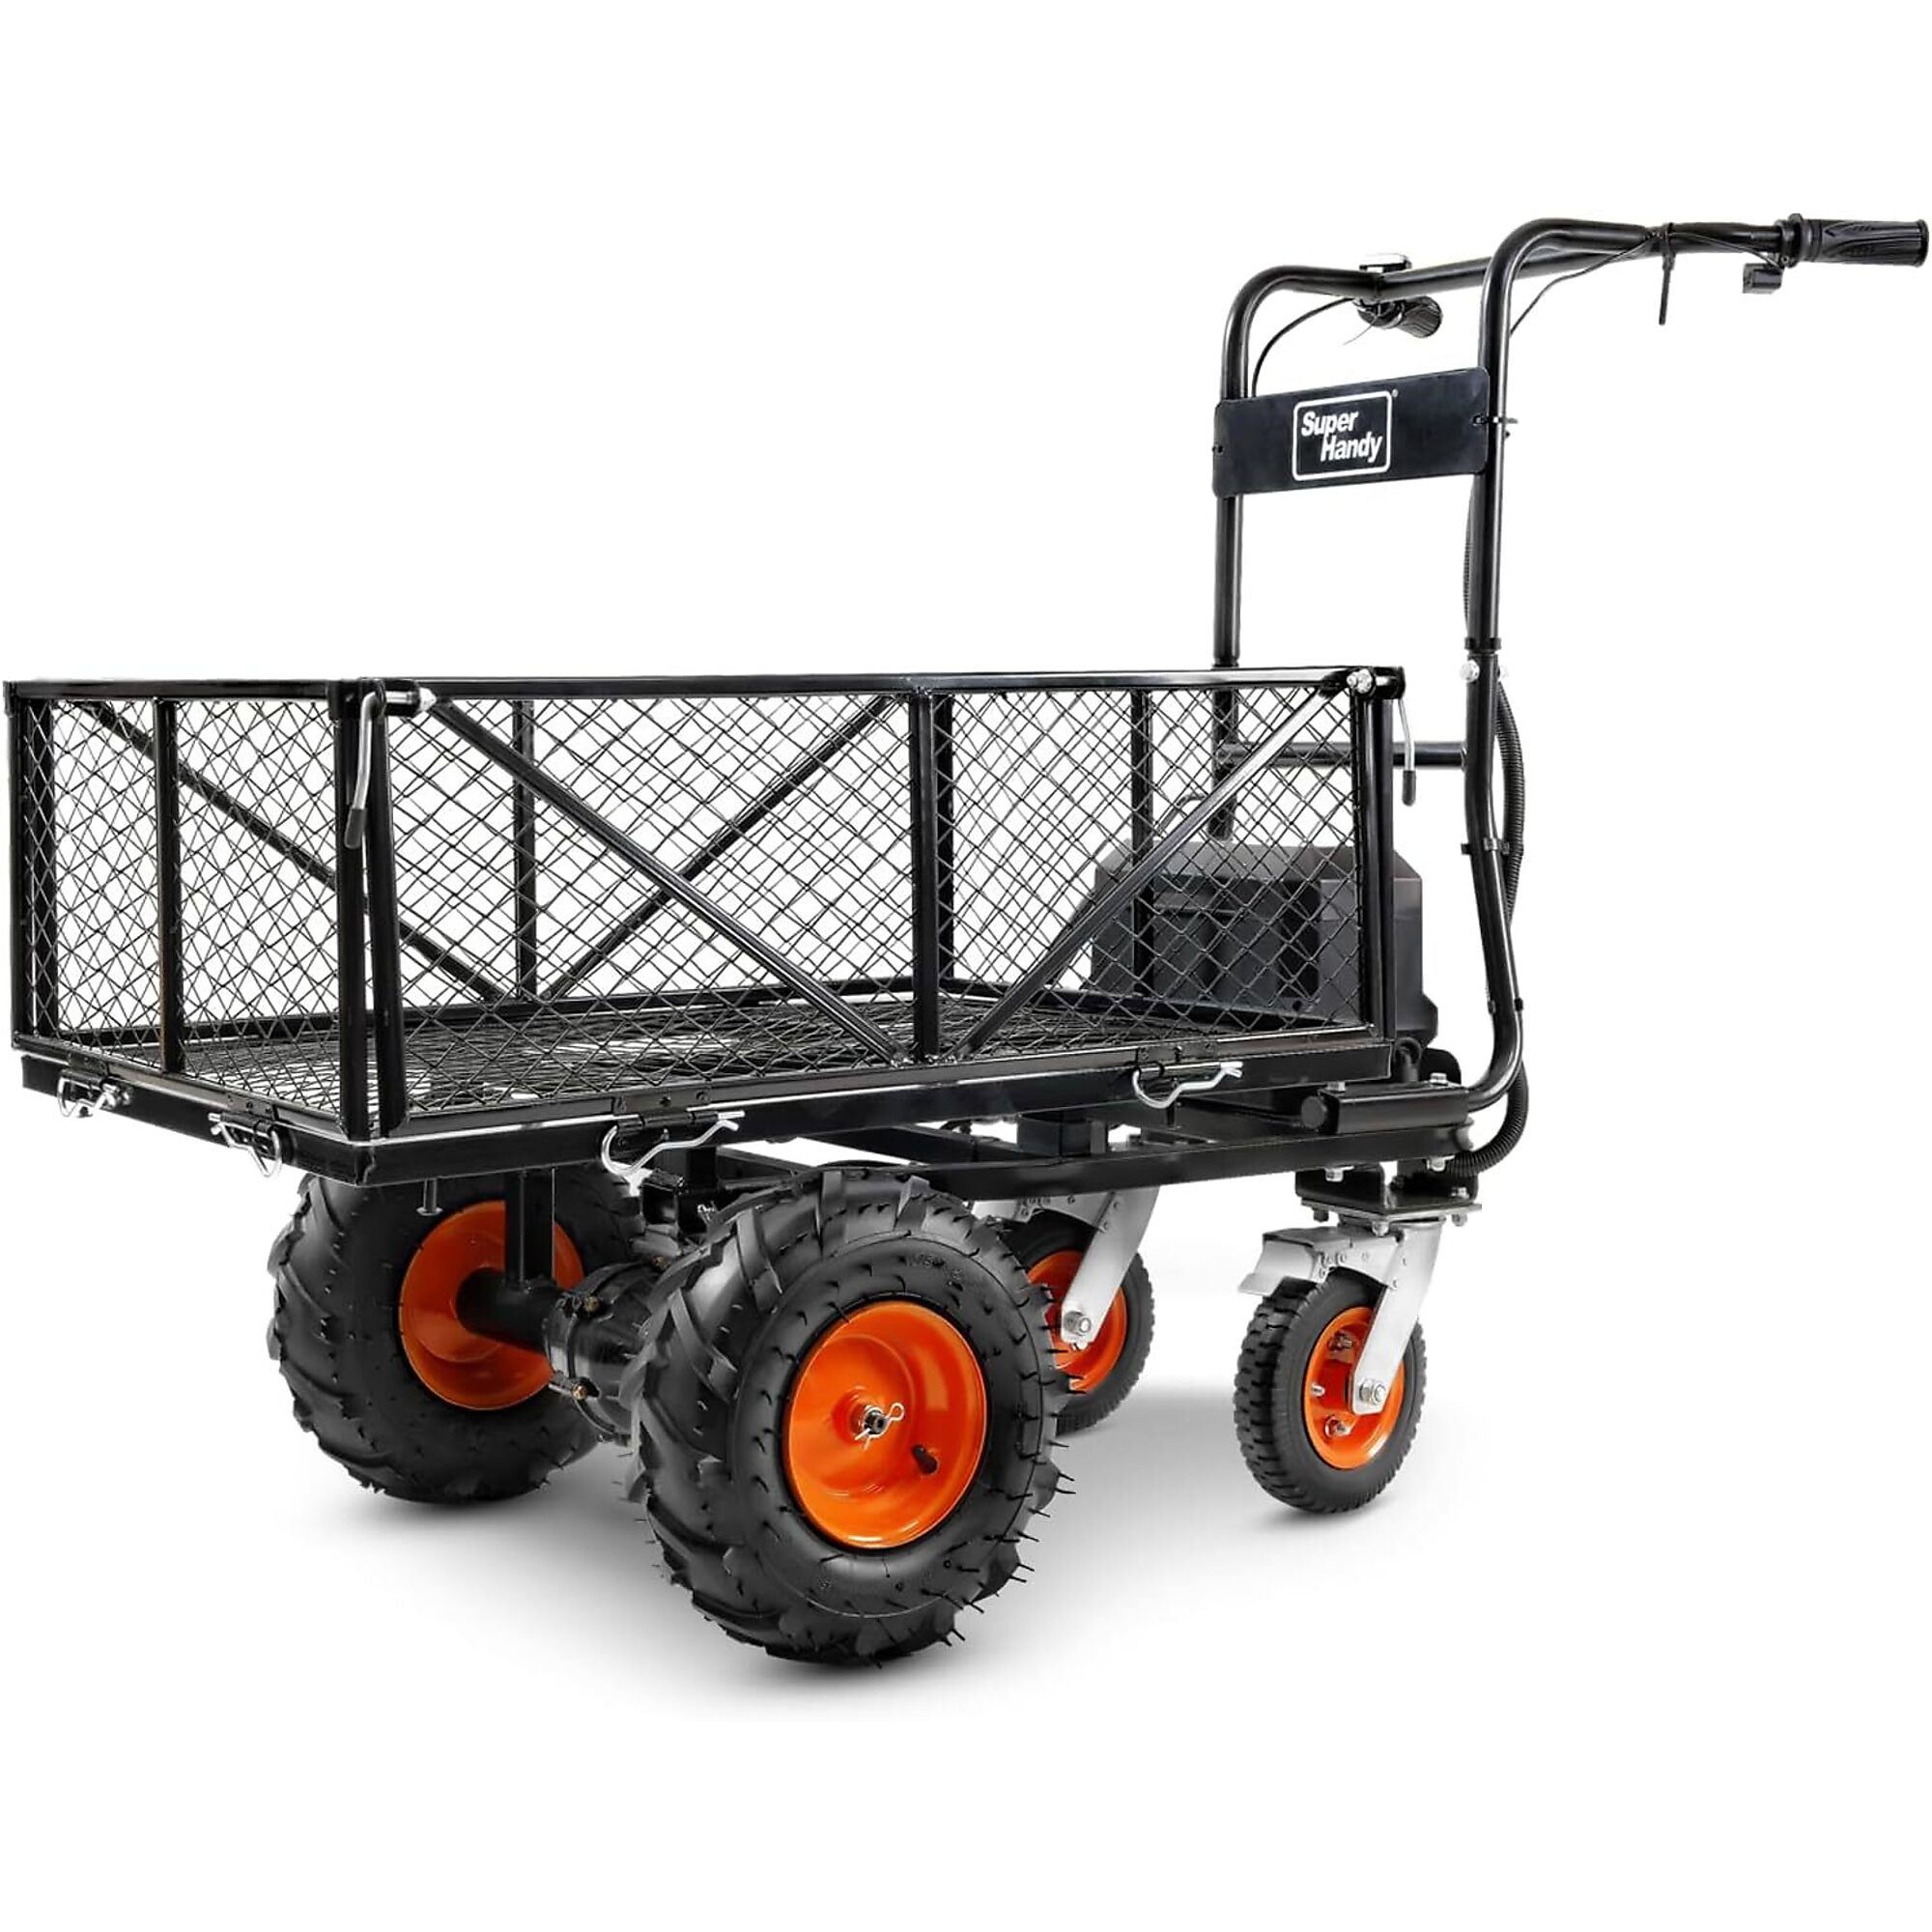 SuperHandy, Utility Service Electric Wheelbarrow Power Cart, Load Capacity 660 lb, Model TRI-GUO095